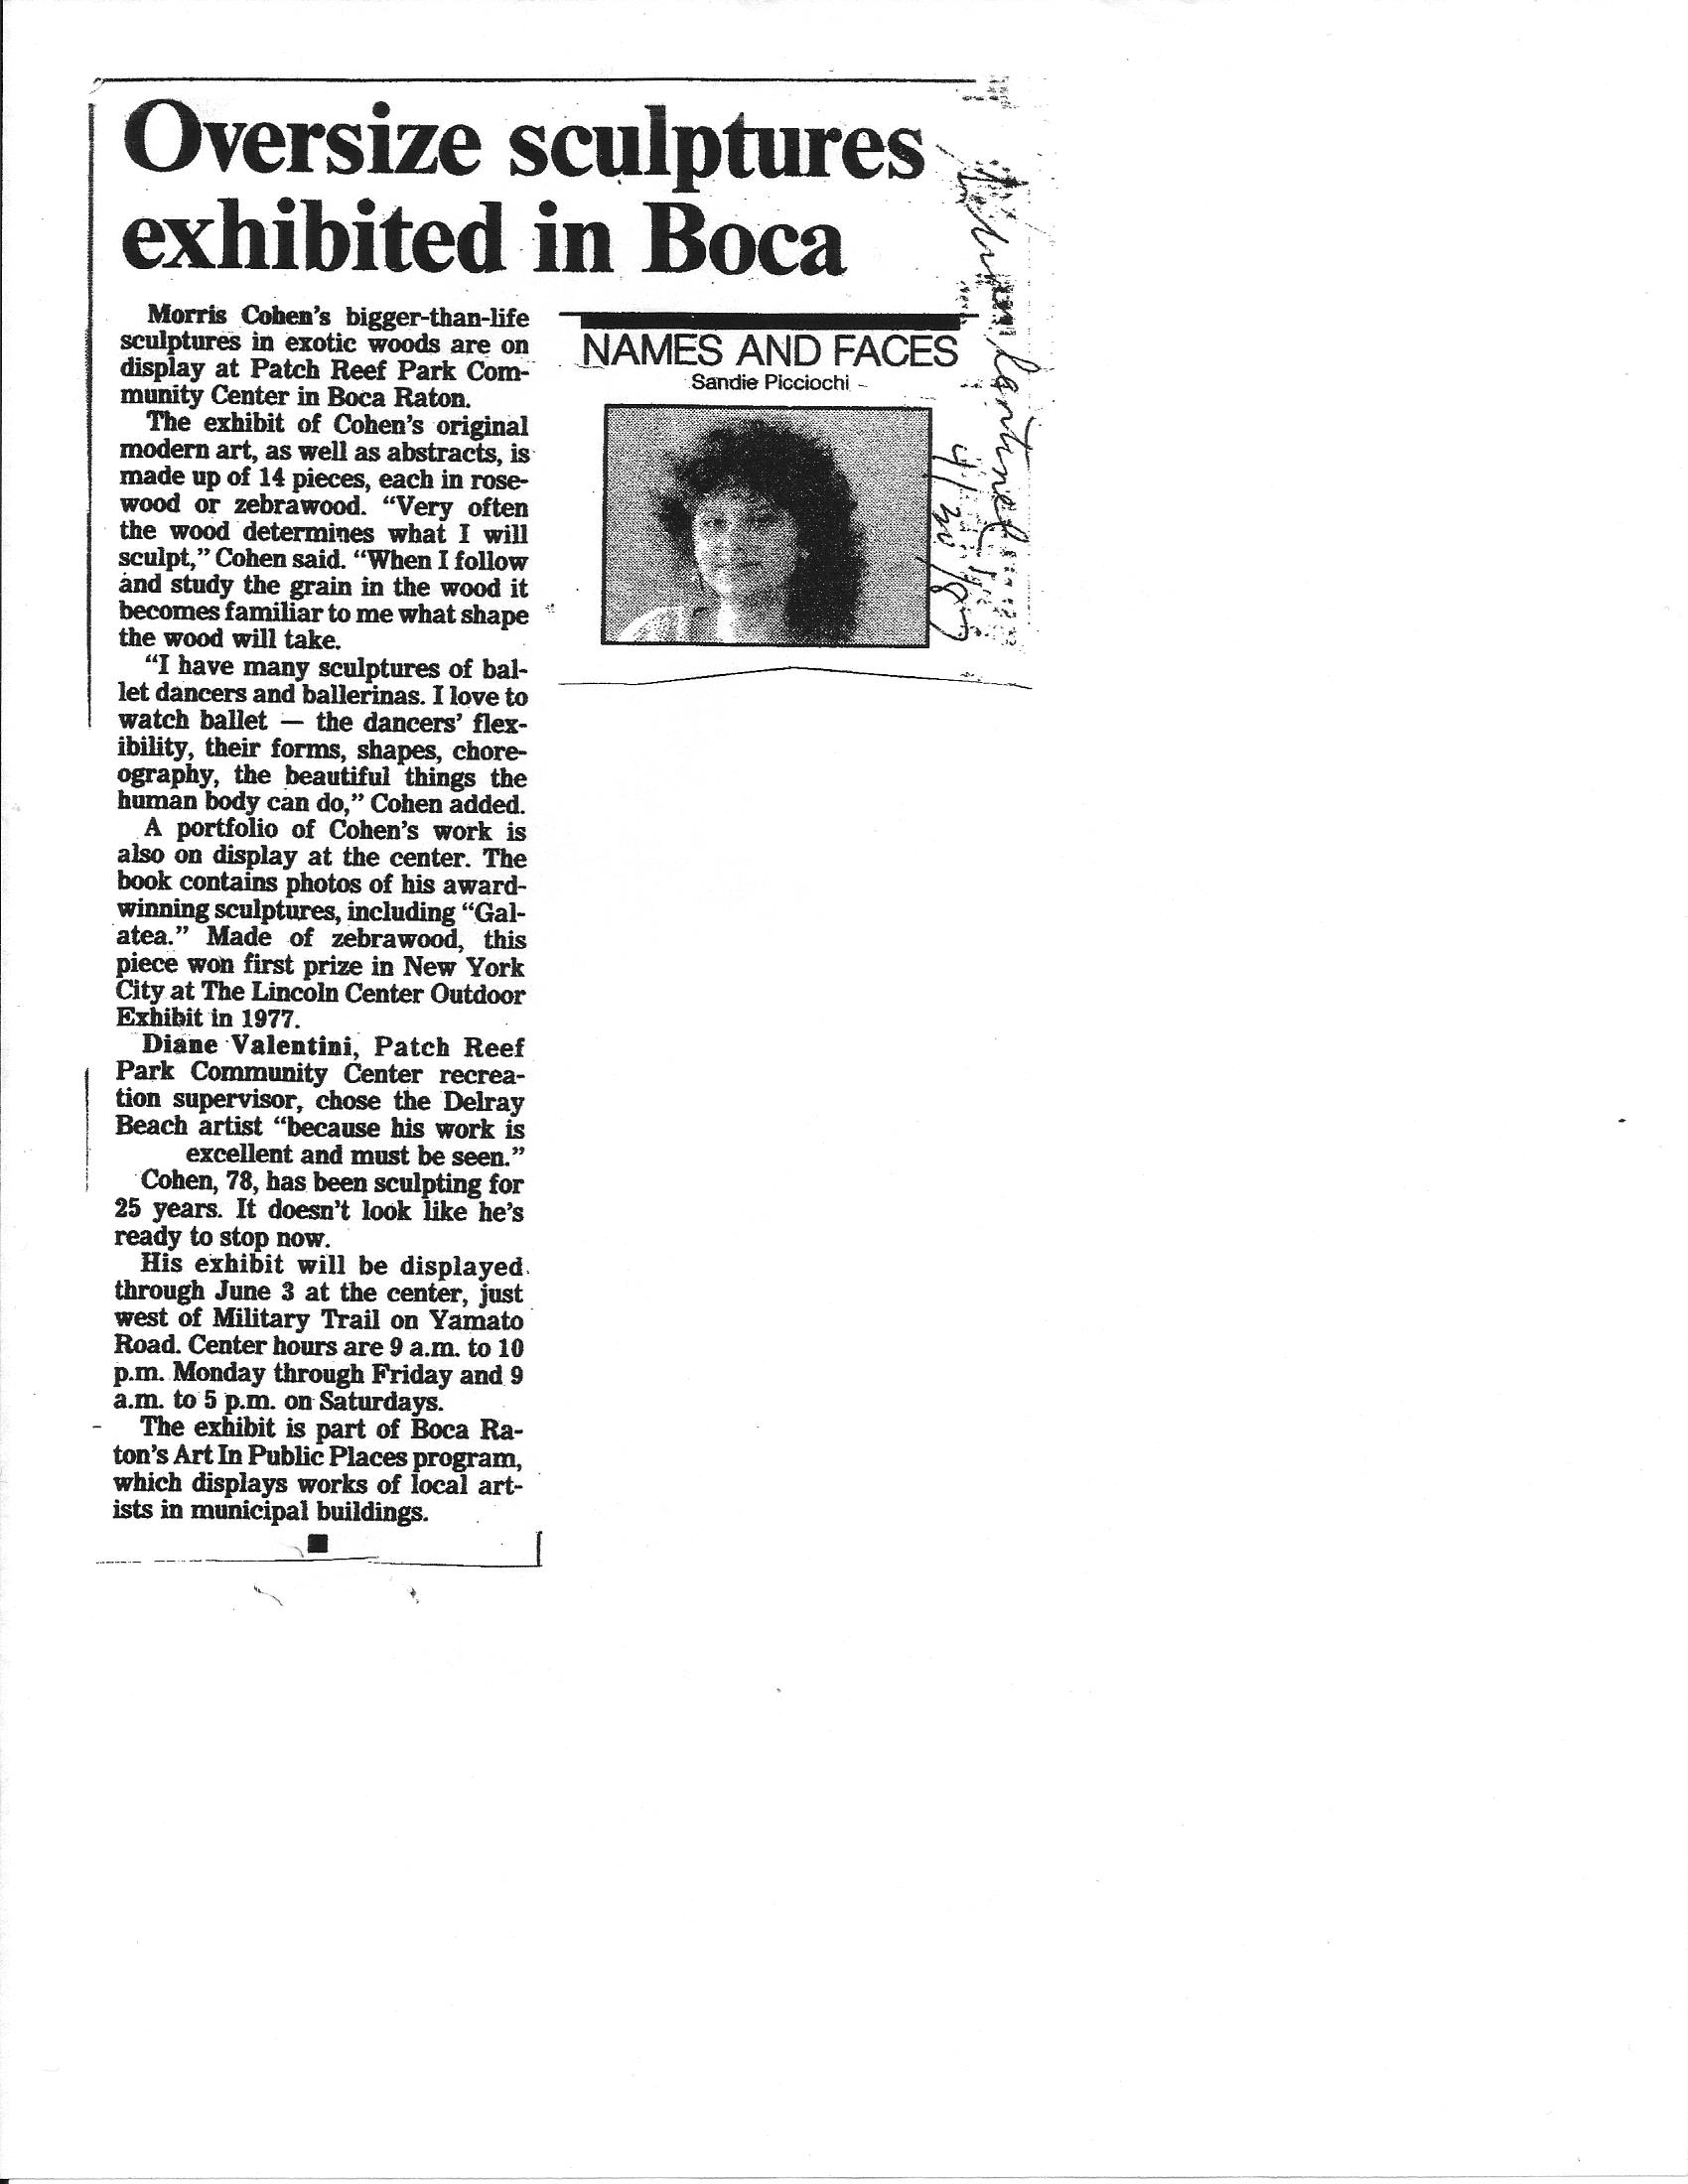 Sun Sentinel april 1987